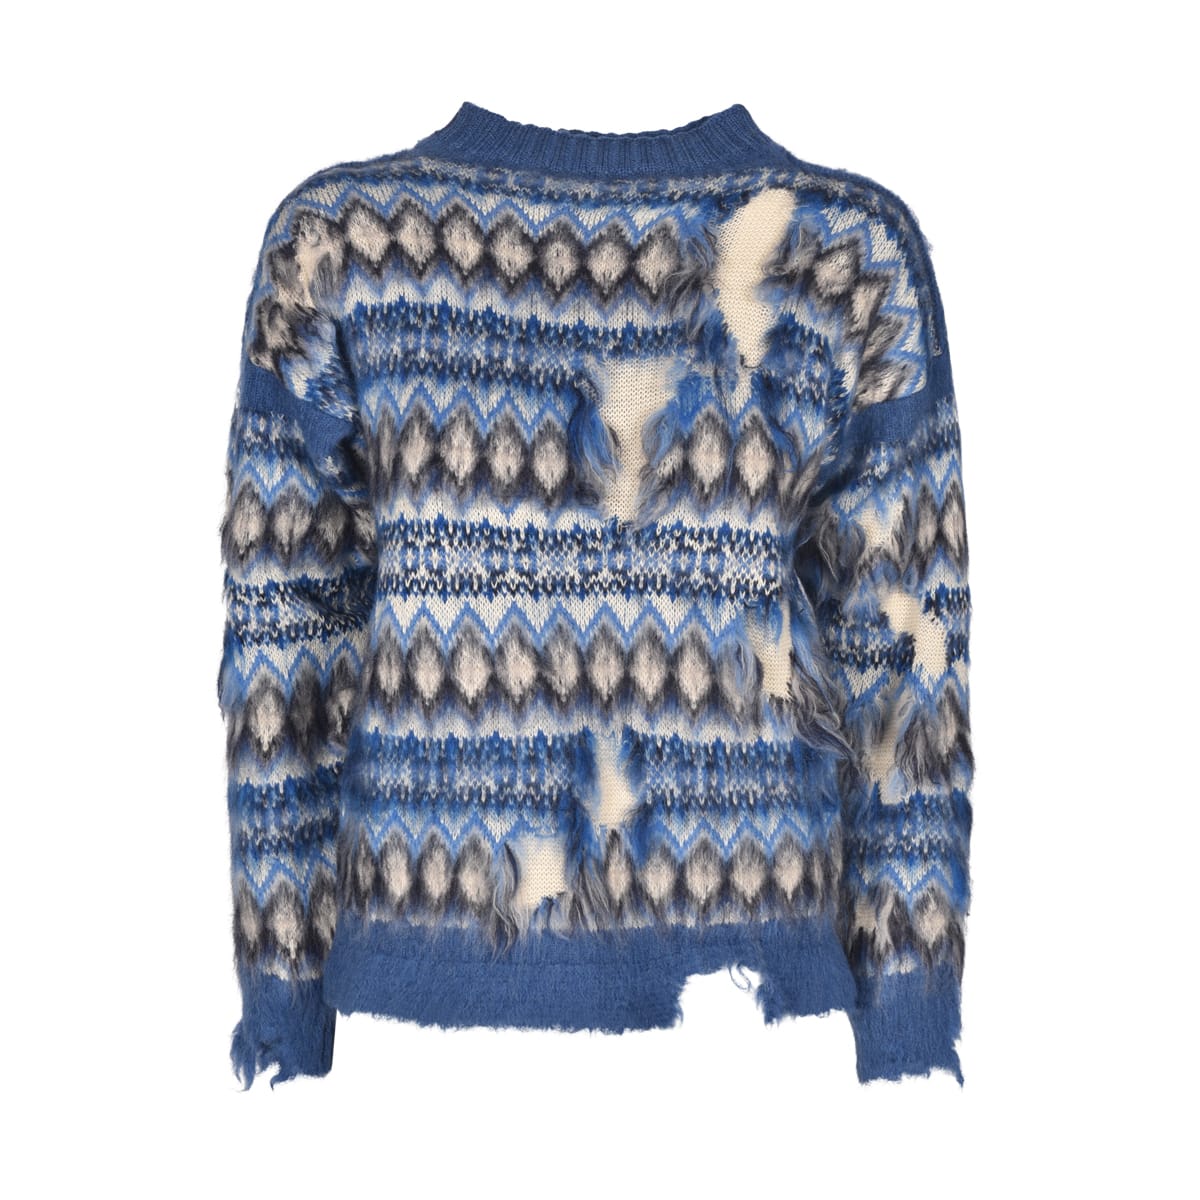 Maison Margiela Destroyed Effect Patterned Sweater